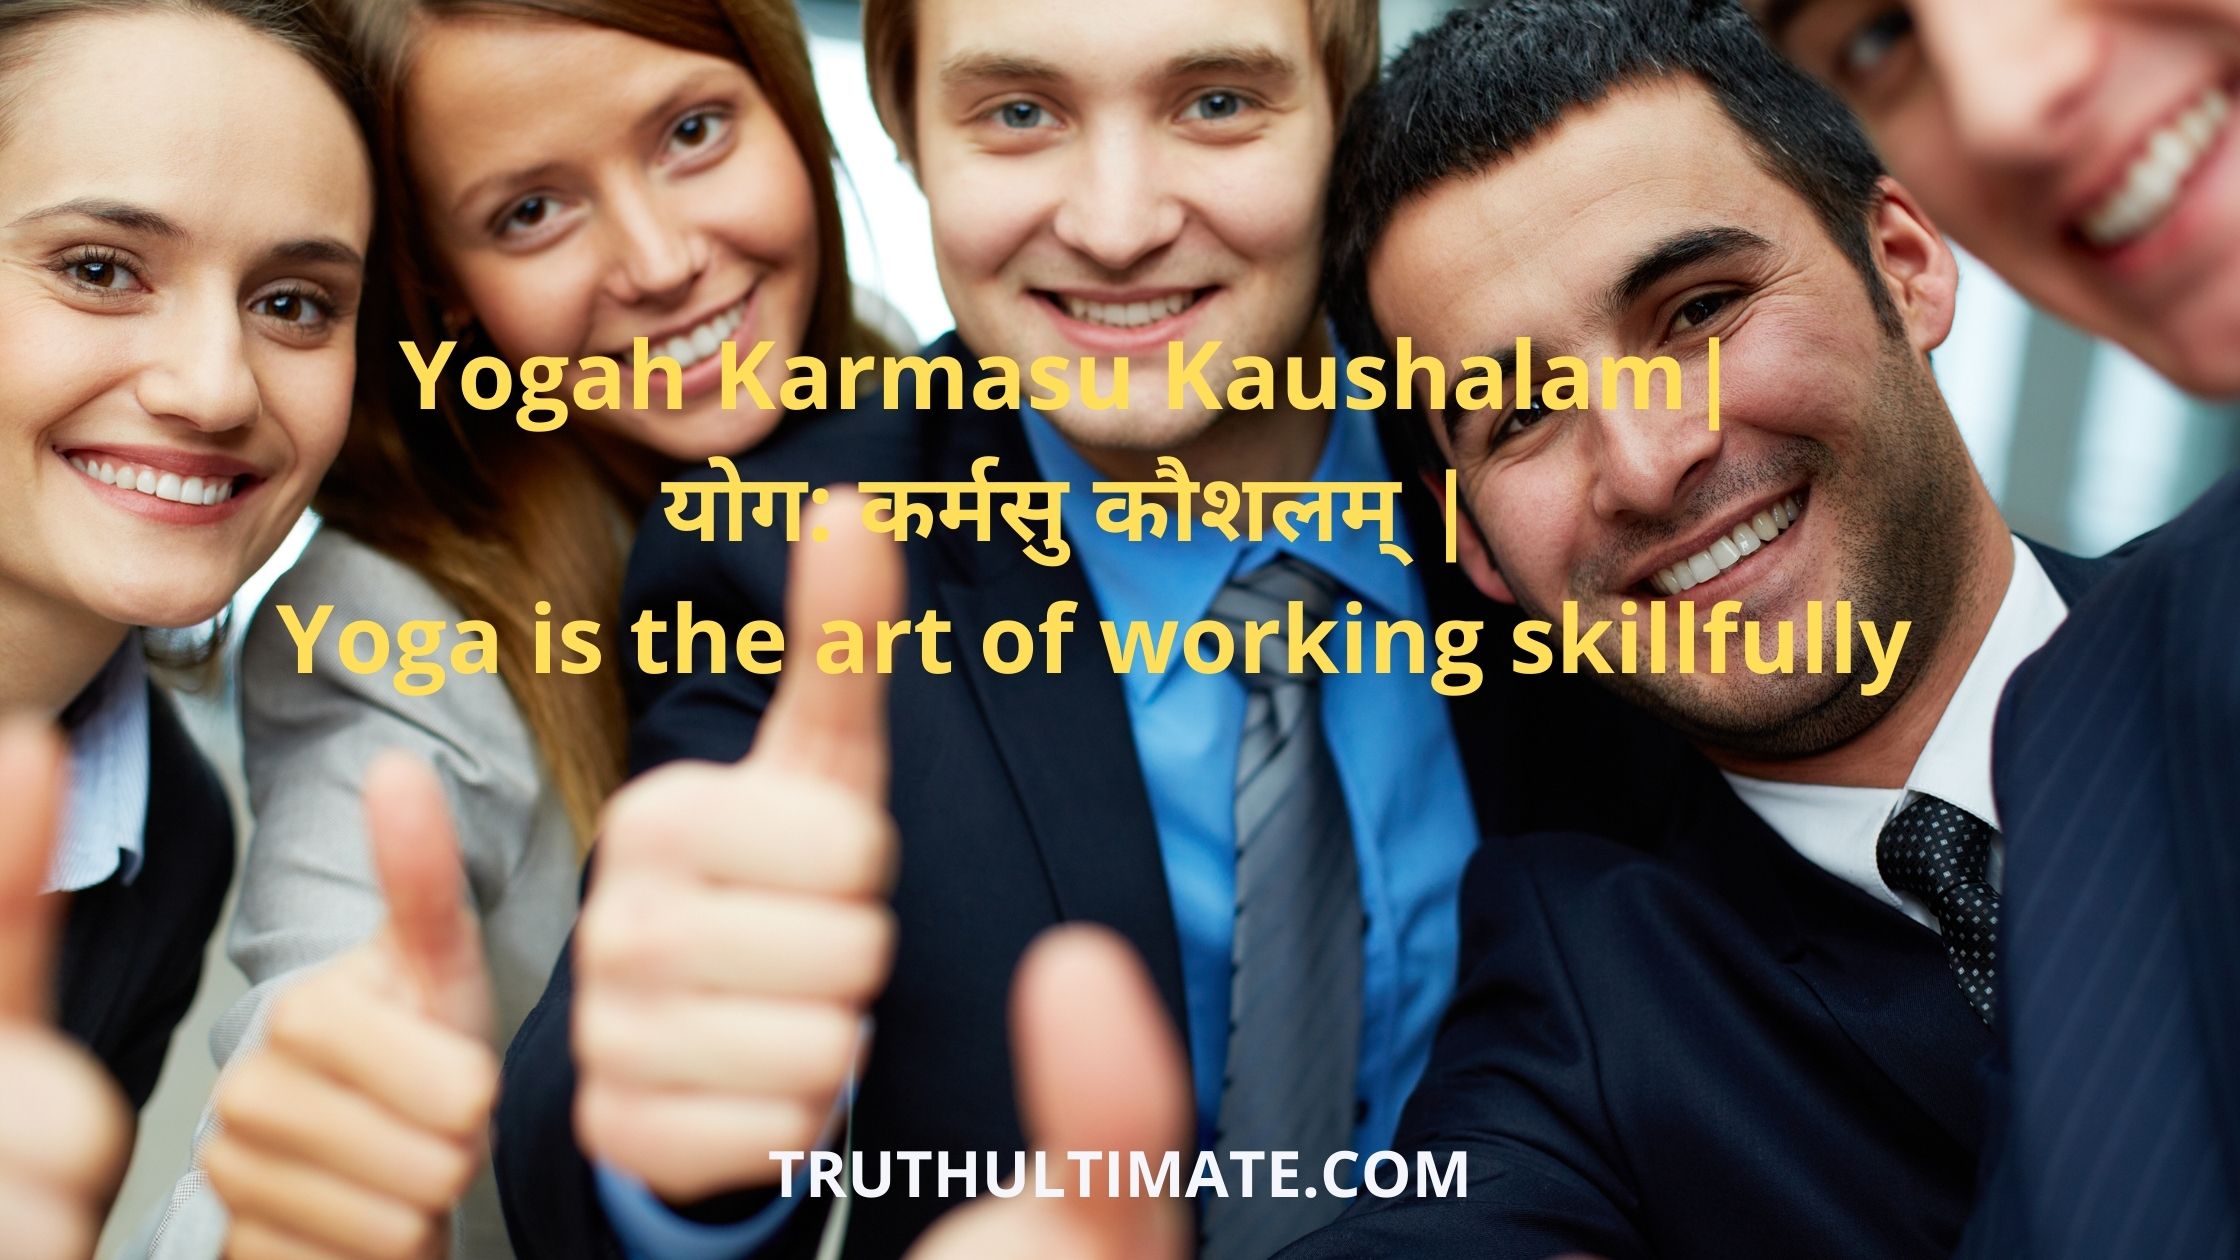 Yogah Karmasu Kaushalam| Yoga is the art of working skillfully